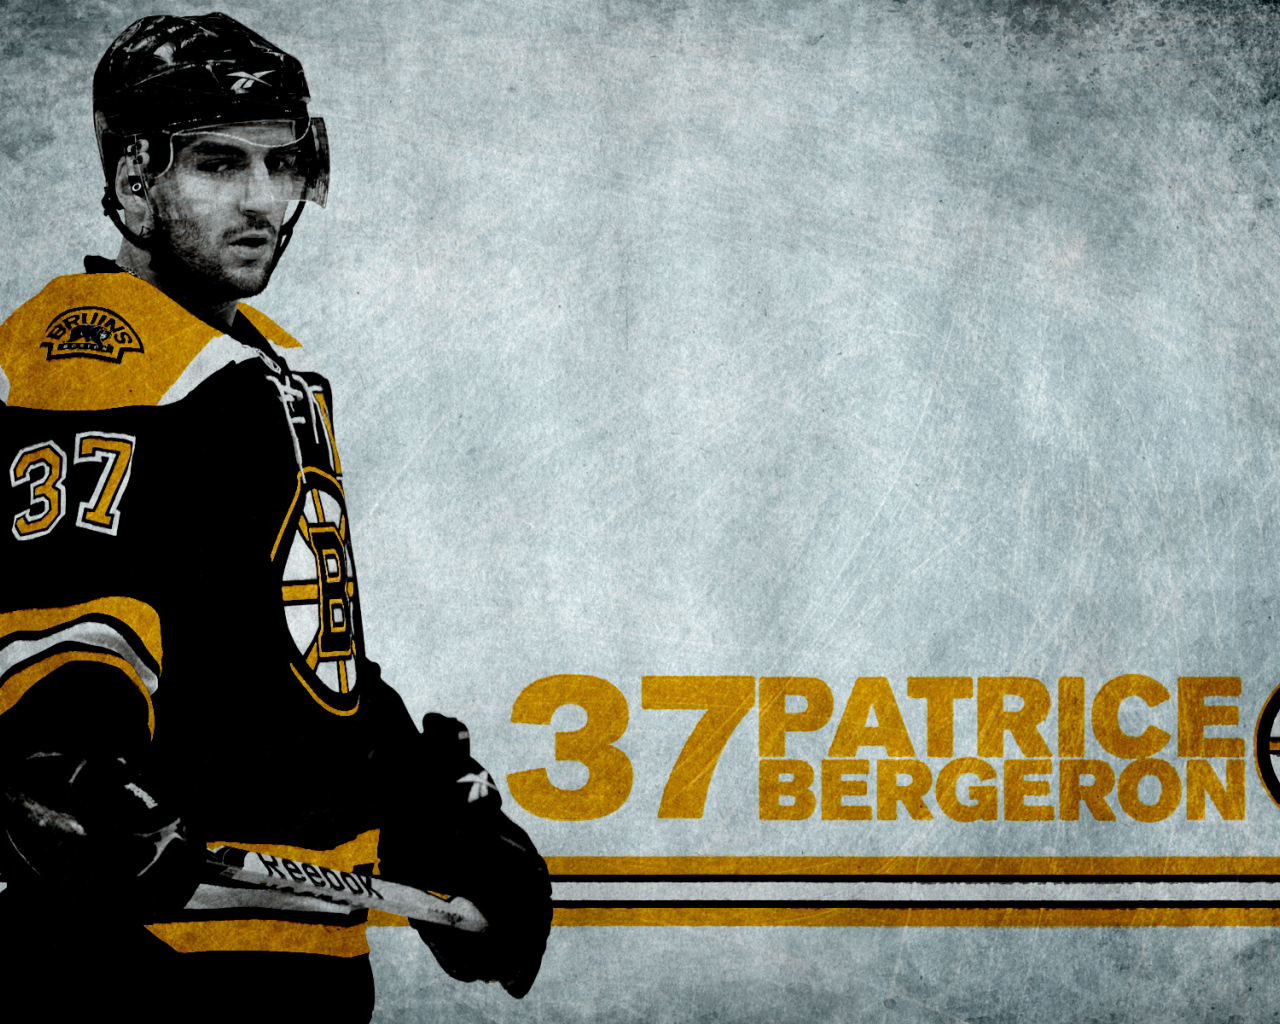 Popular Hockey player Patrice Bergeron